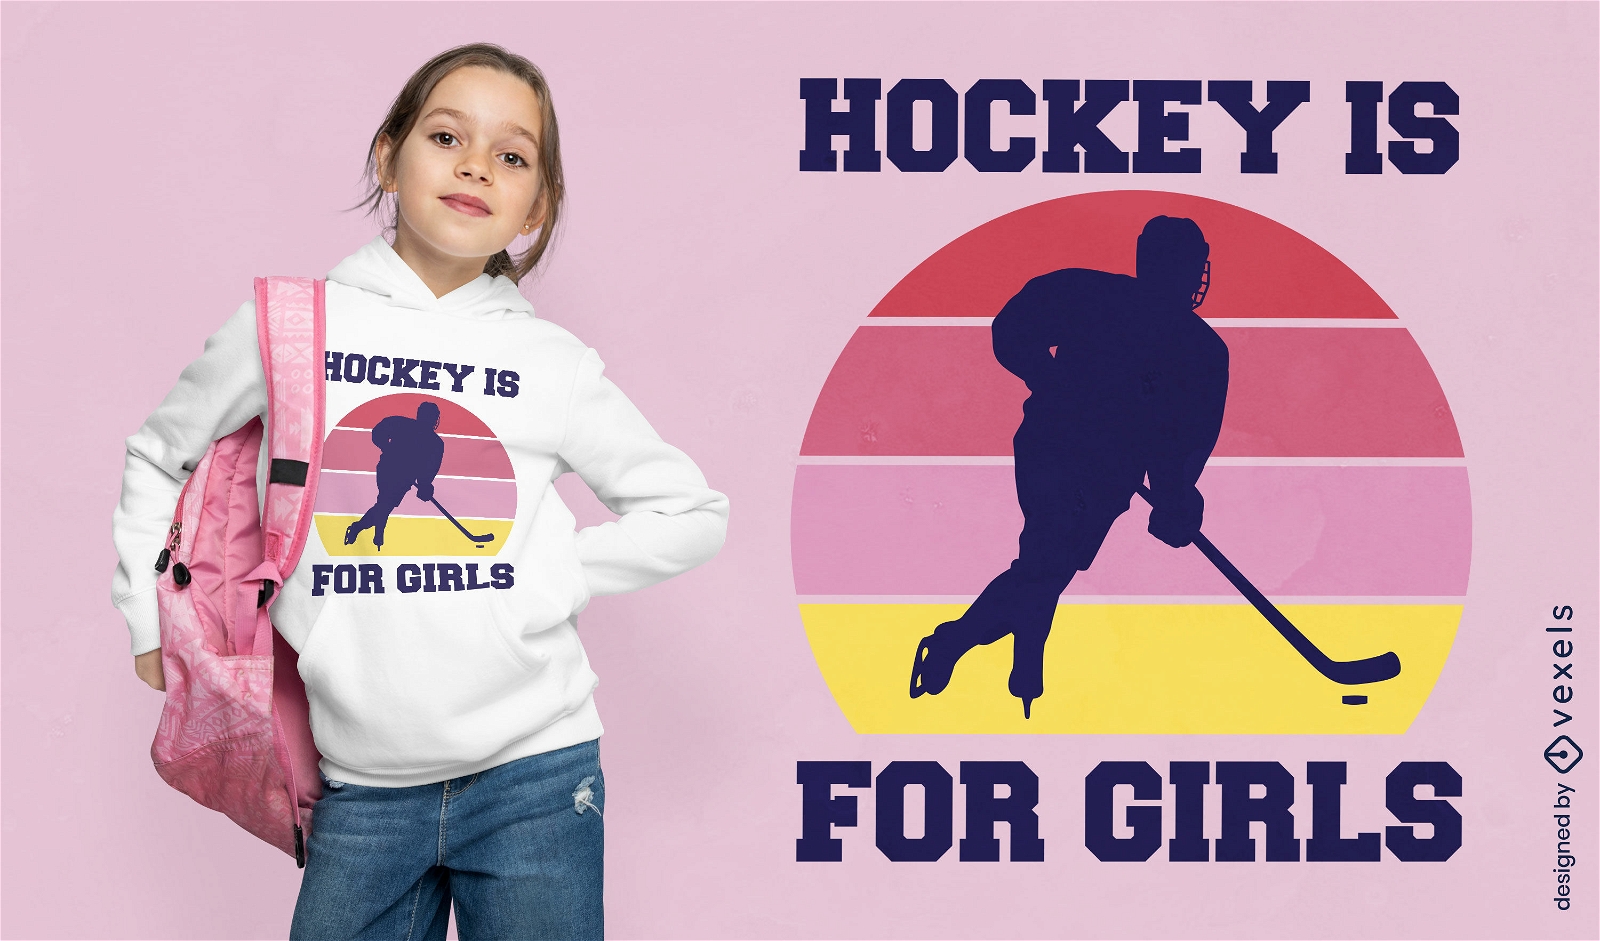 Hockey is for girls t-shirt design